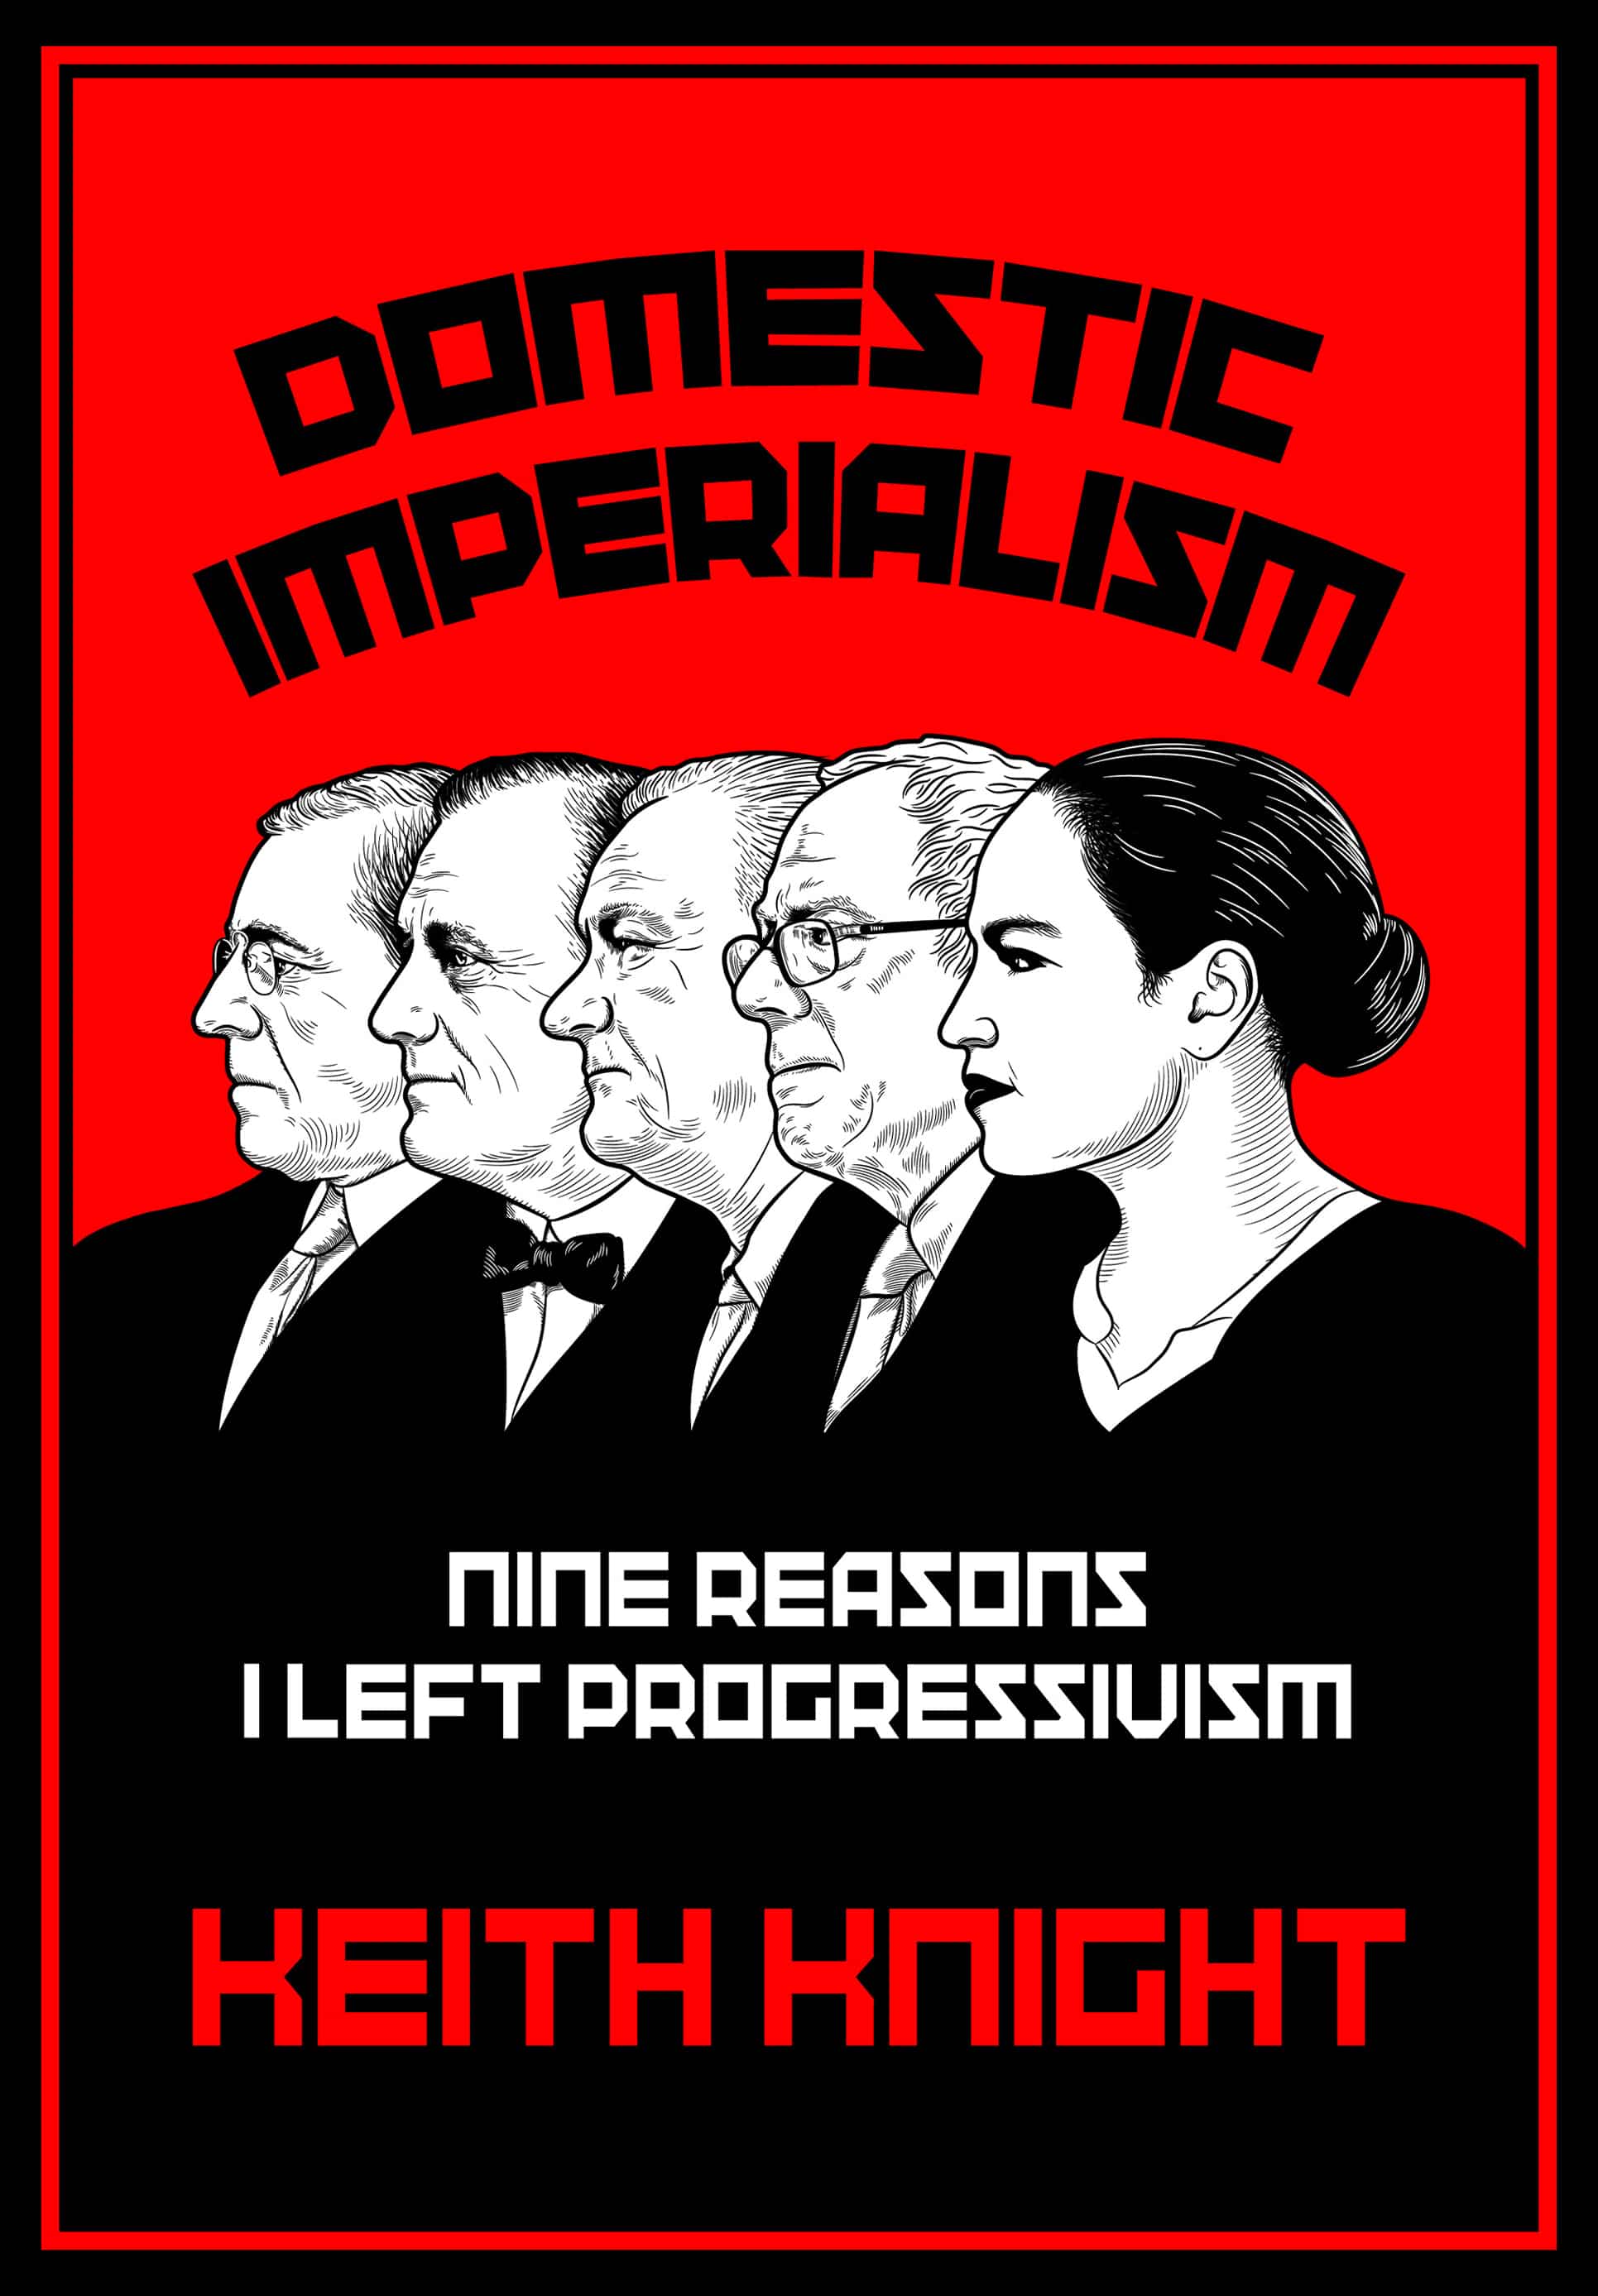 Domestic Imperialism: Nine Reasons I Left Progressivism